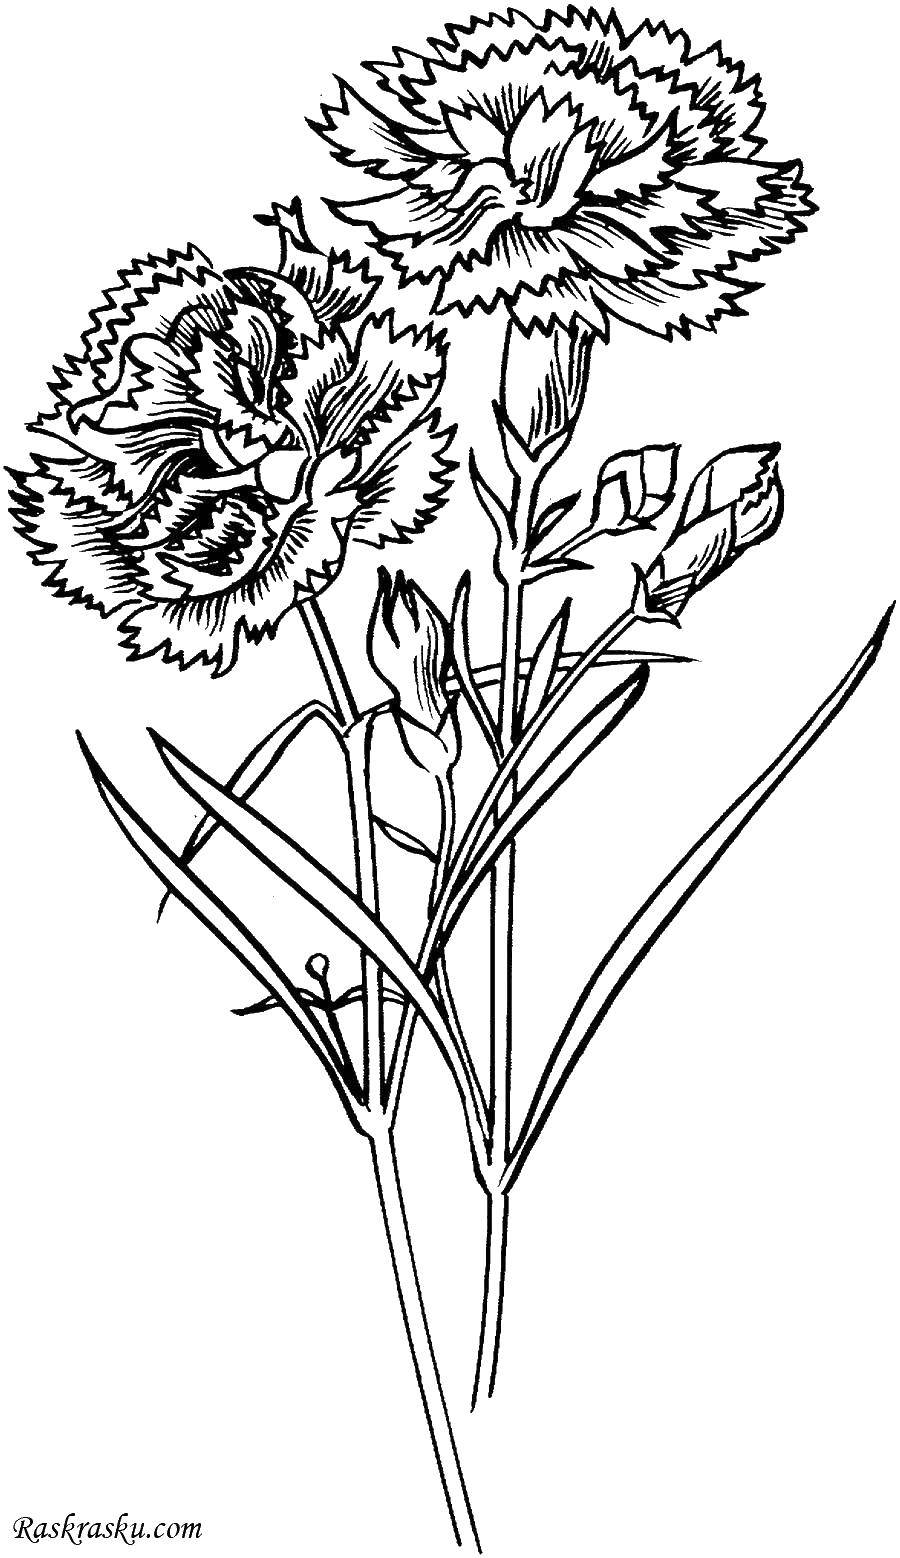 Coloring Chrysanthemum. Category flowers. Tags:  chrysanthemum, flowers.